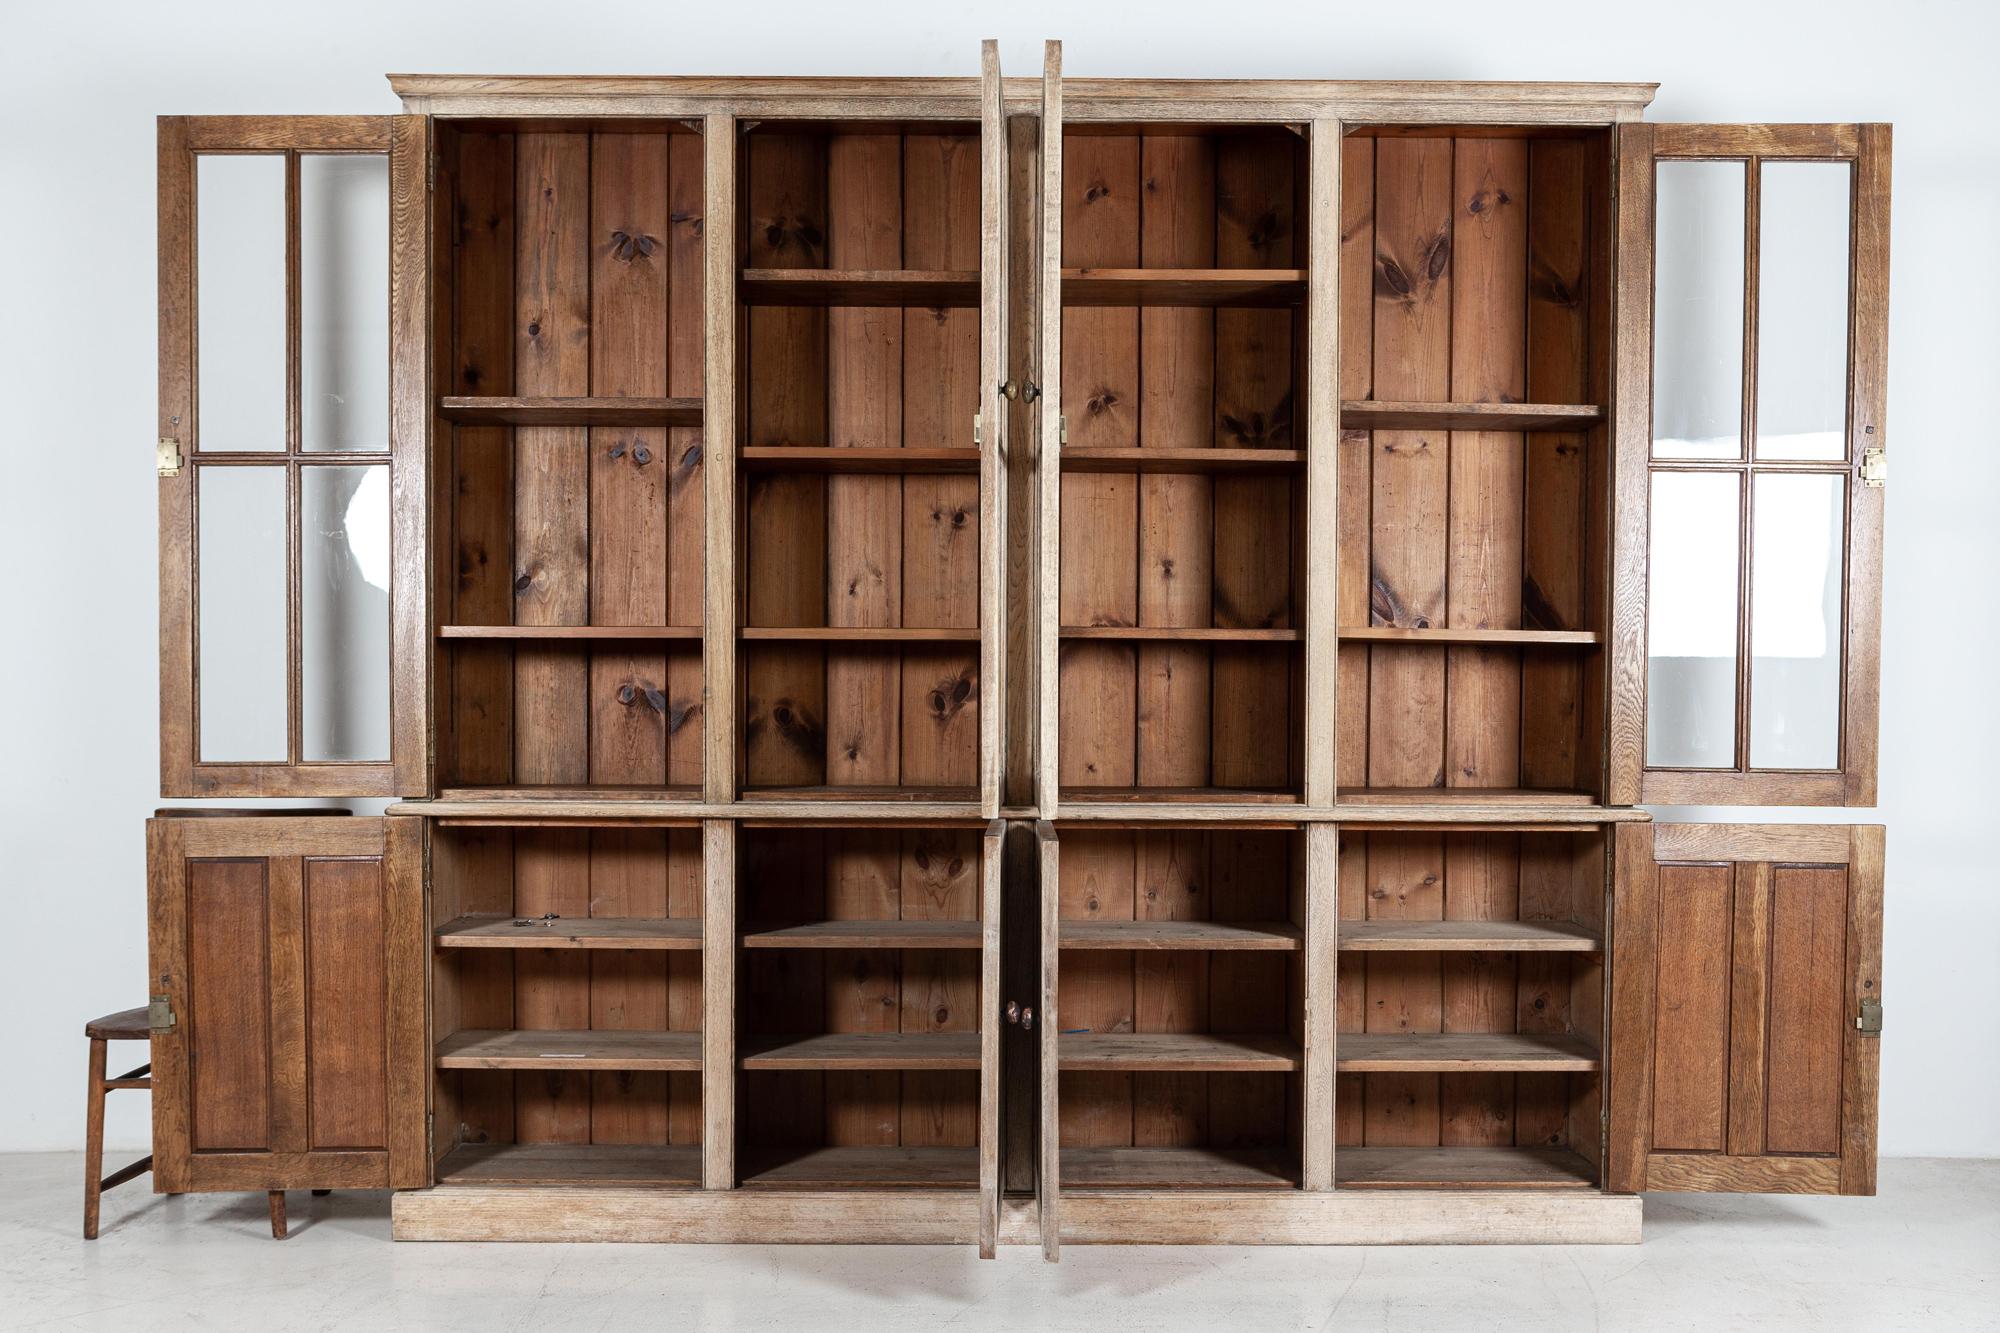 Circa 1910

Large English bleached oak glazed bookcase. Adjustable shelves and original hardware.



Measures: W249 x D40 x H229 cm.